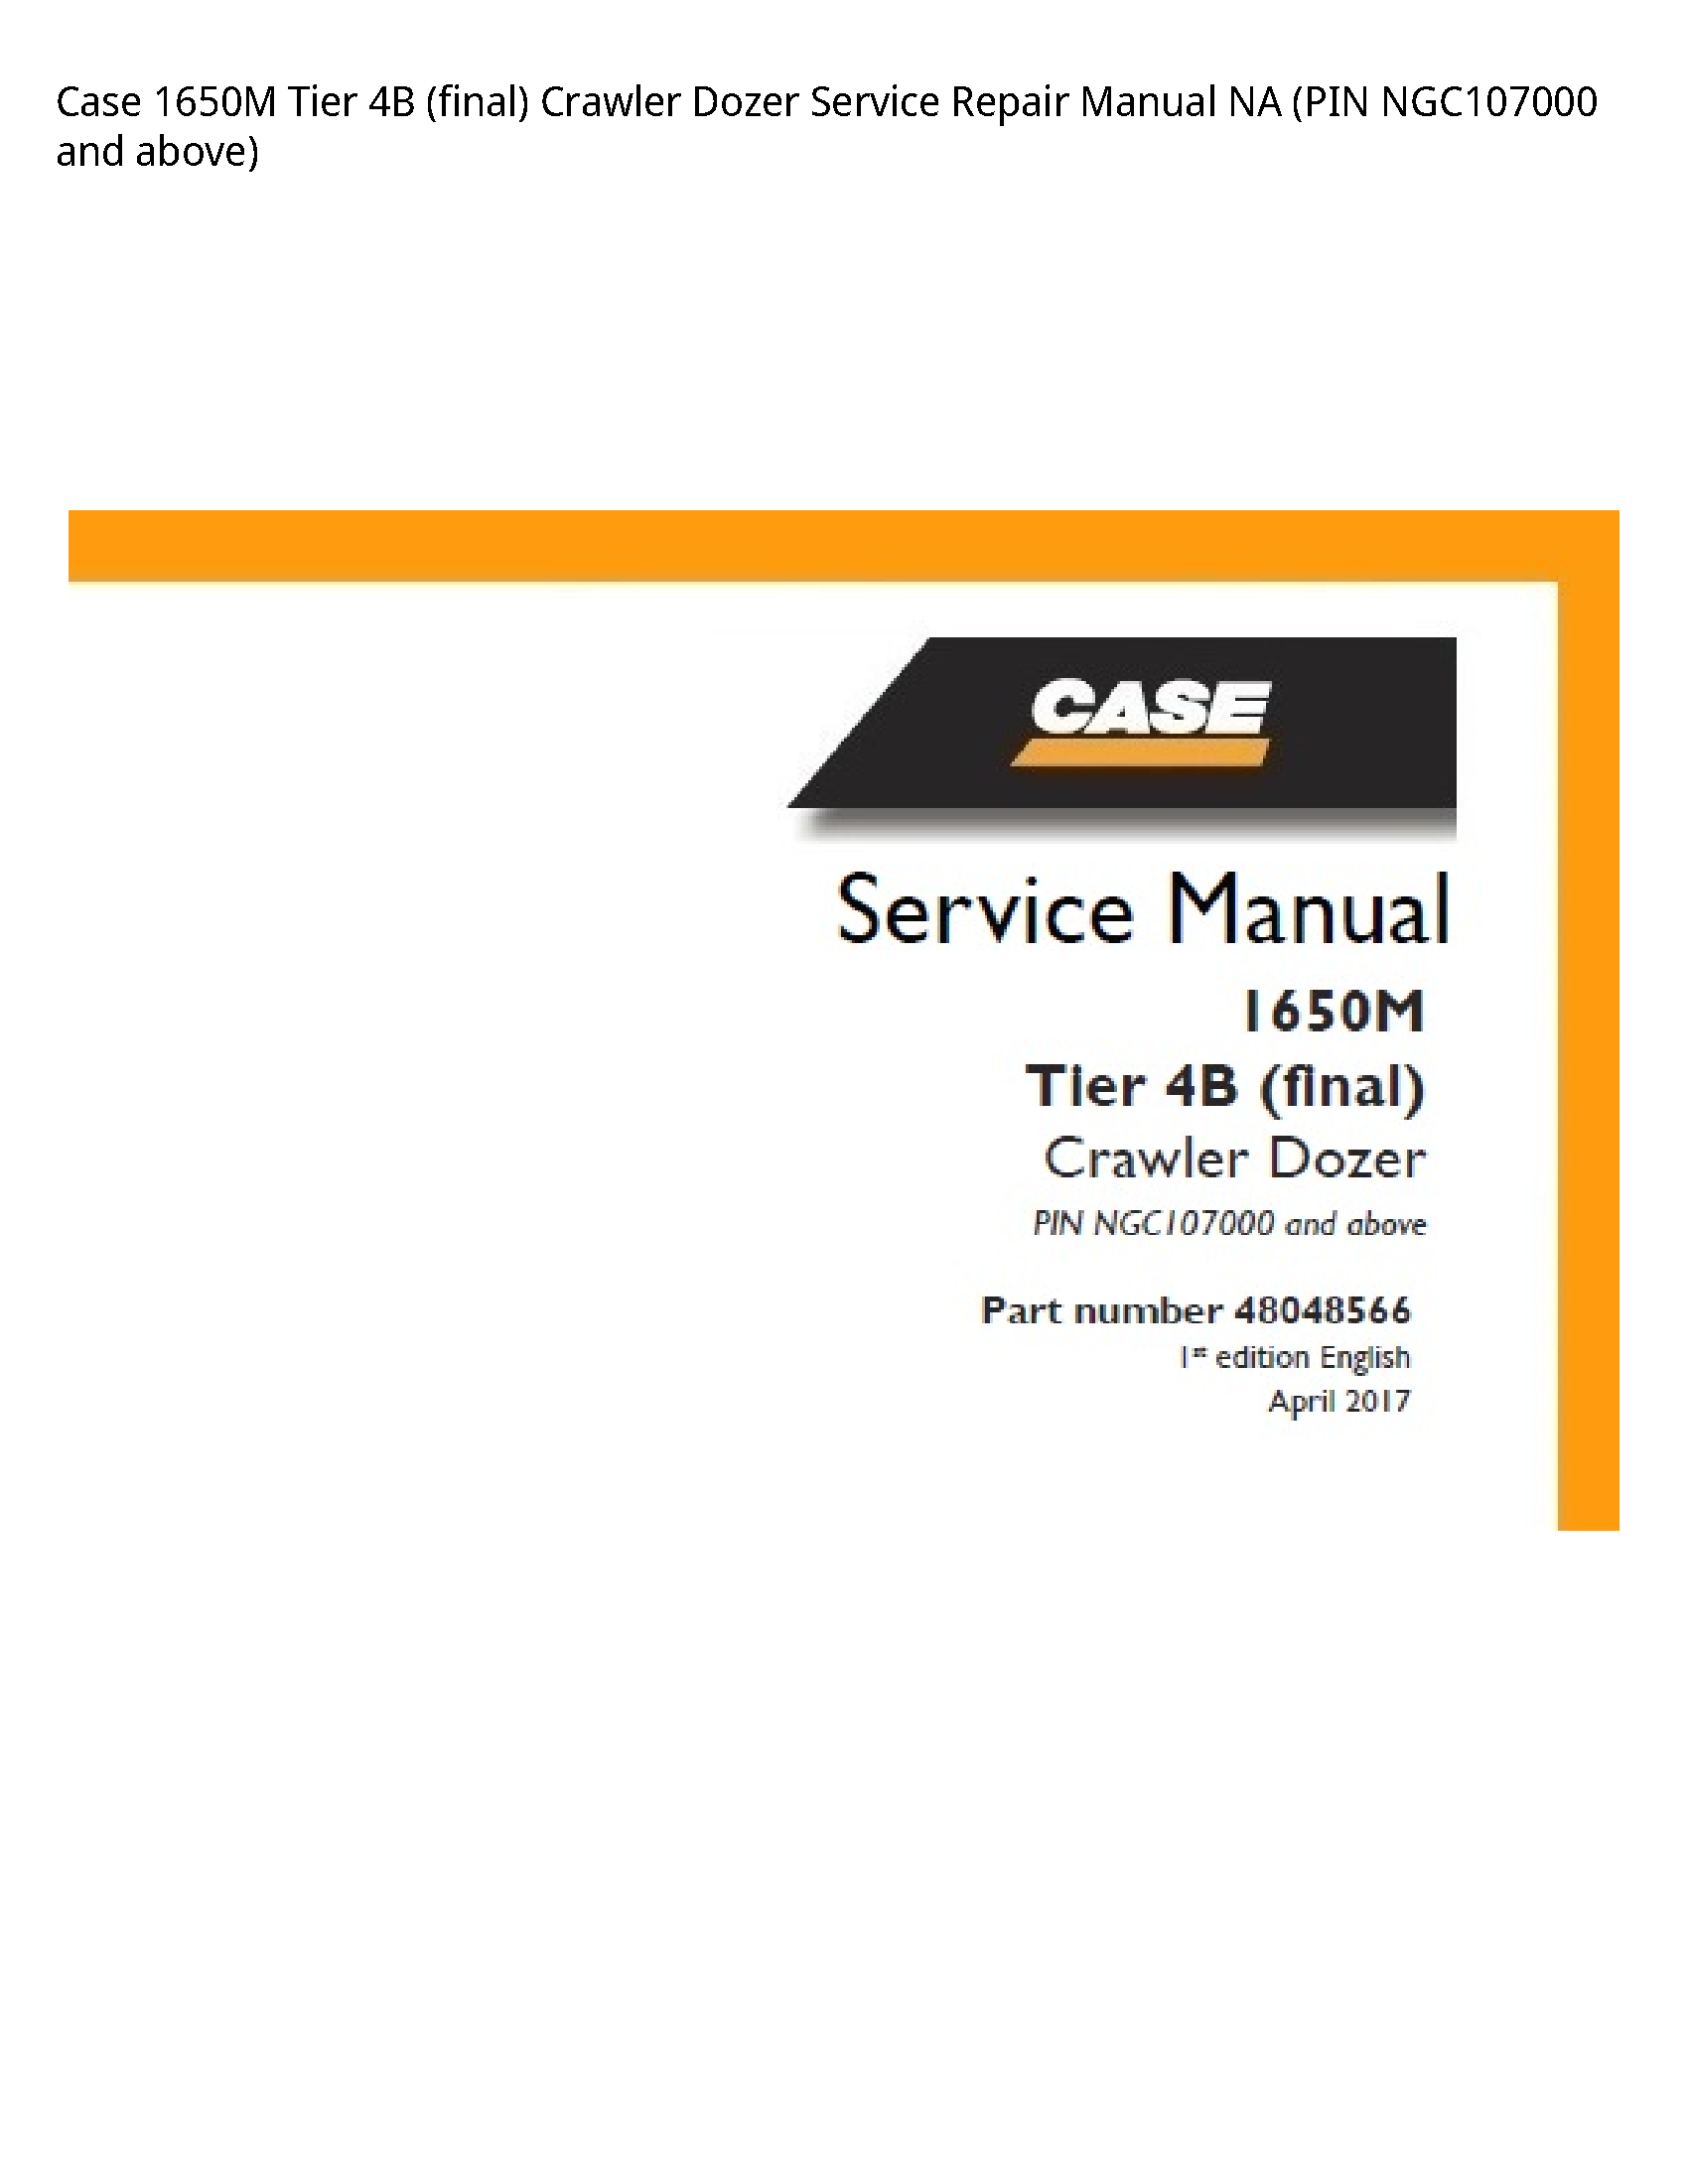 Case/Case IH 1650M Tier (final) Crawler Dozer manual